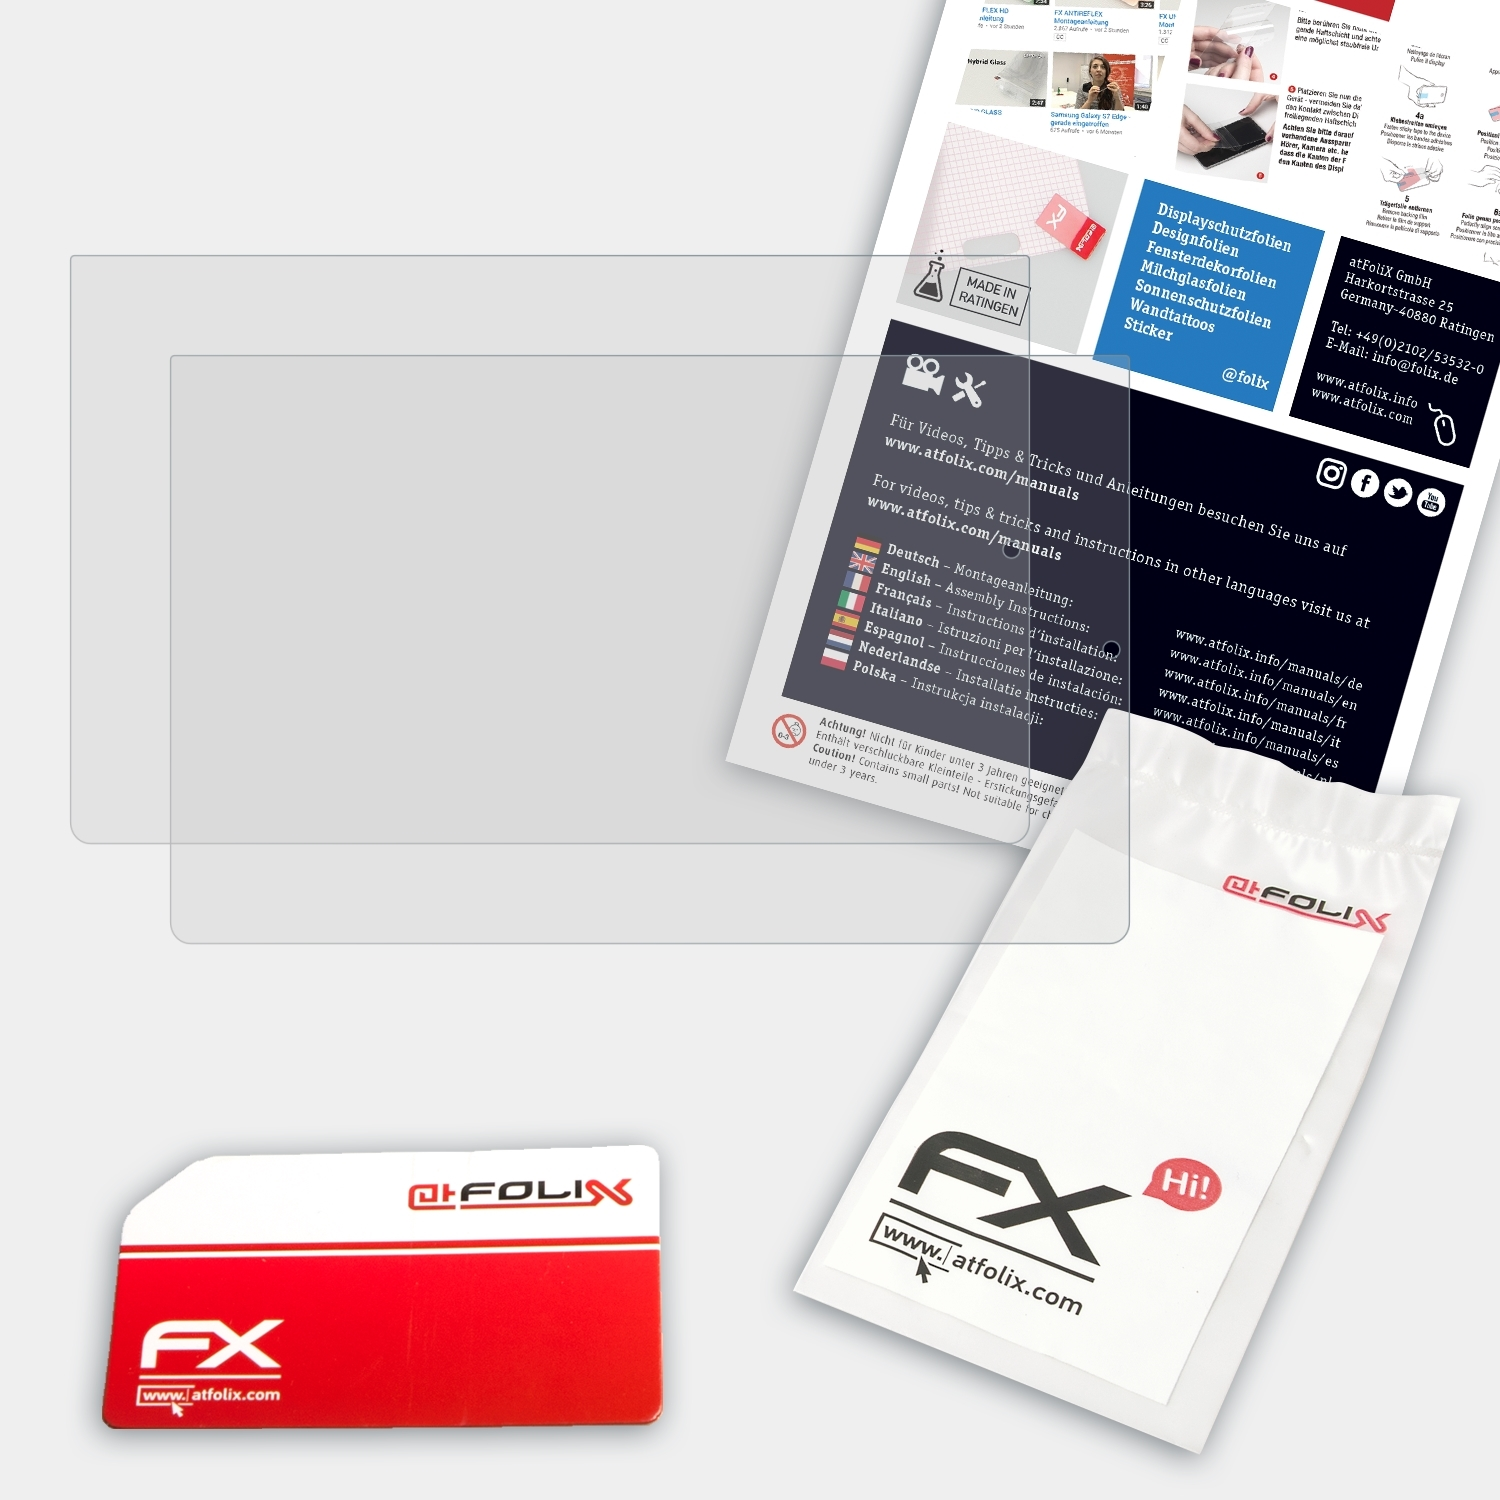 ATFOLIX 2x 10) Tab FX-Antireflex Lenovo Smart Yoga Displayschutz(für